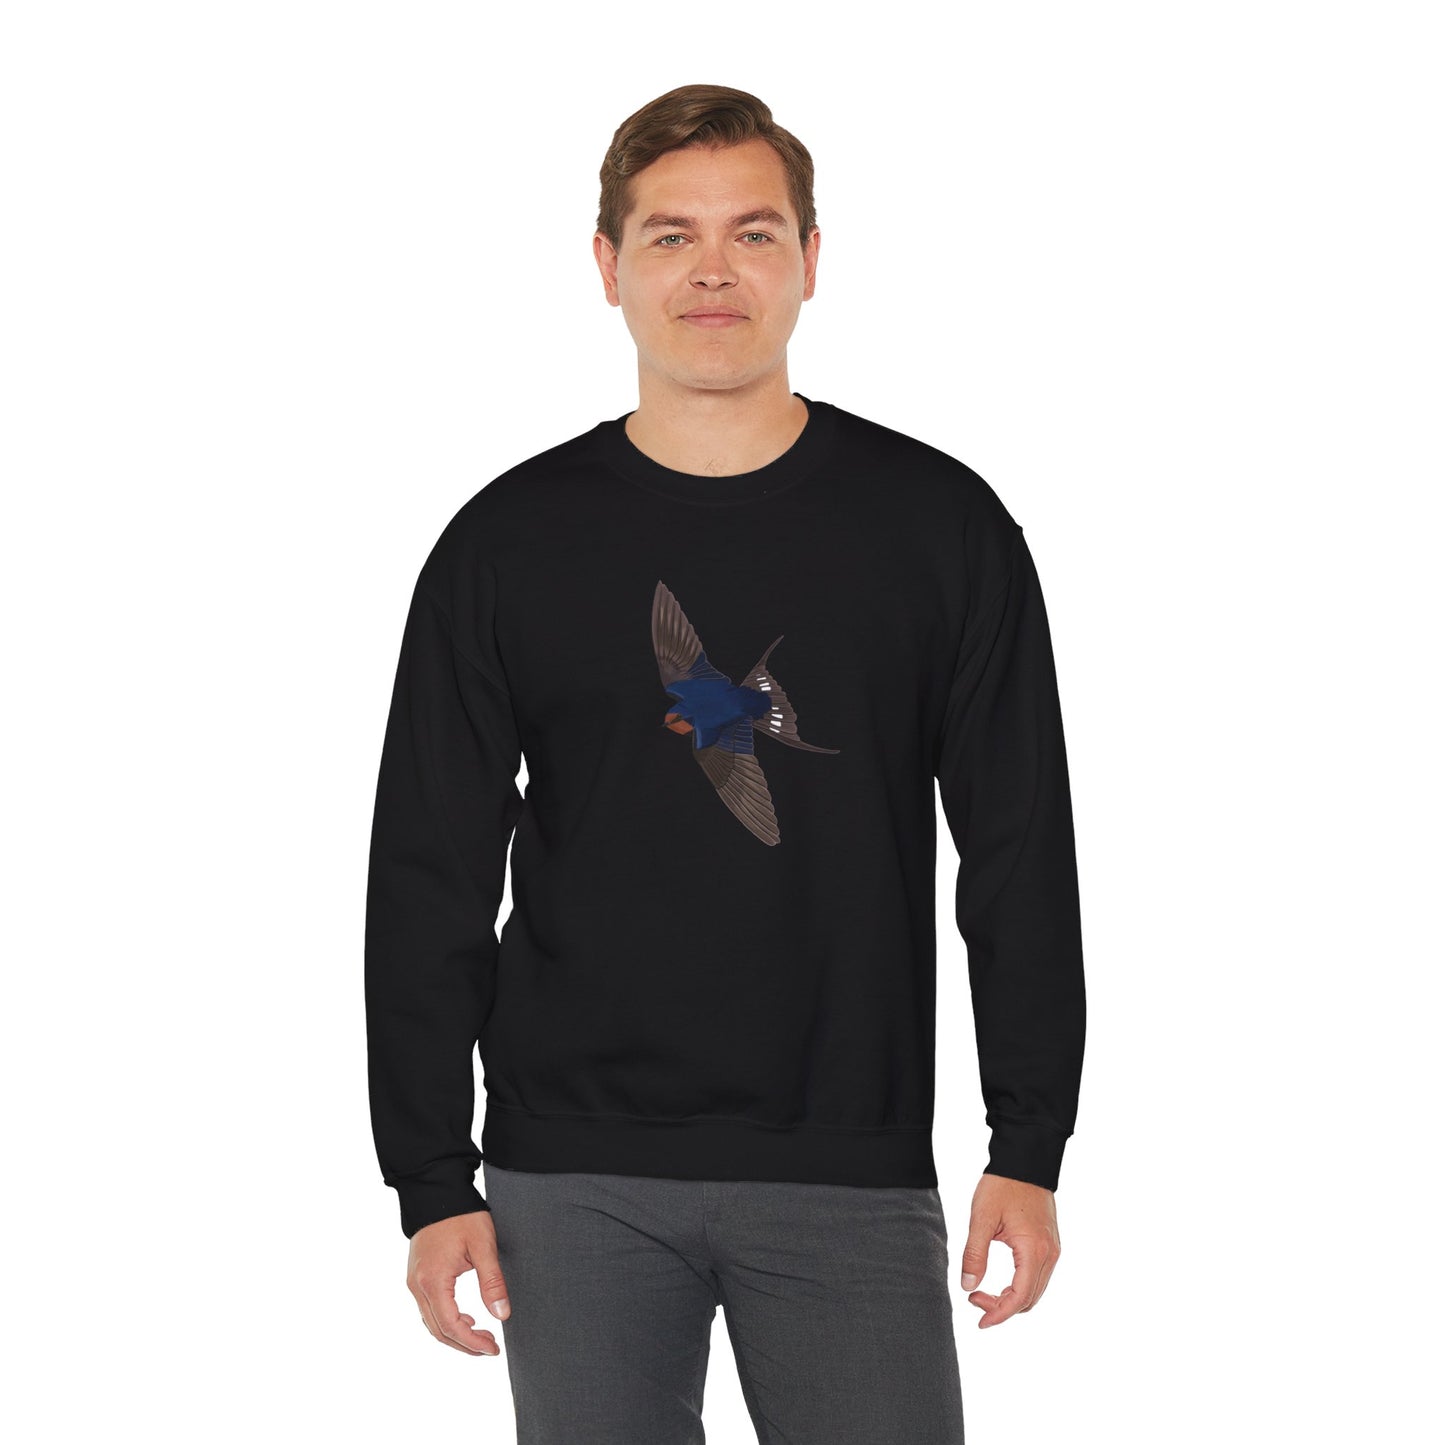 Barn Swallow Bird Watcher Biologist Crewneck Sweatshirt